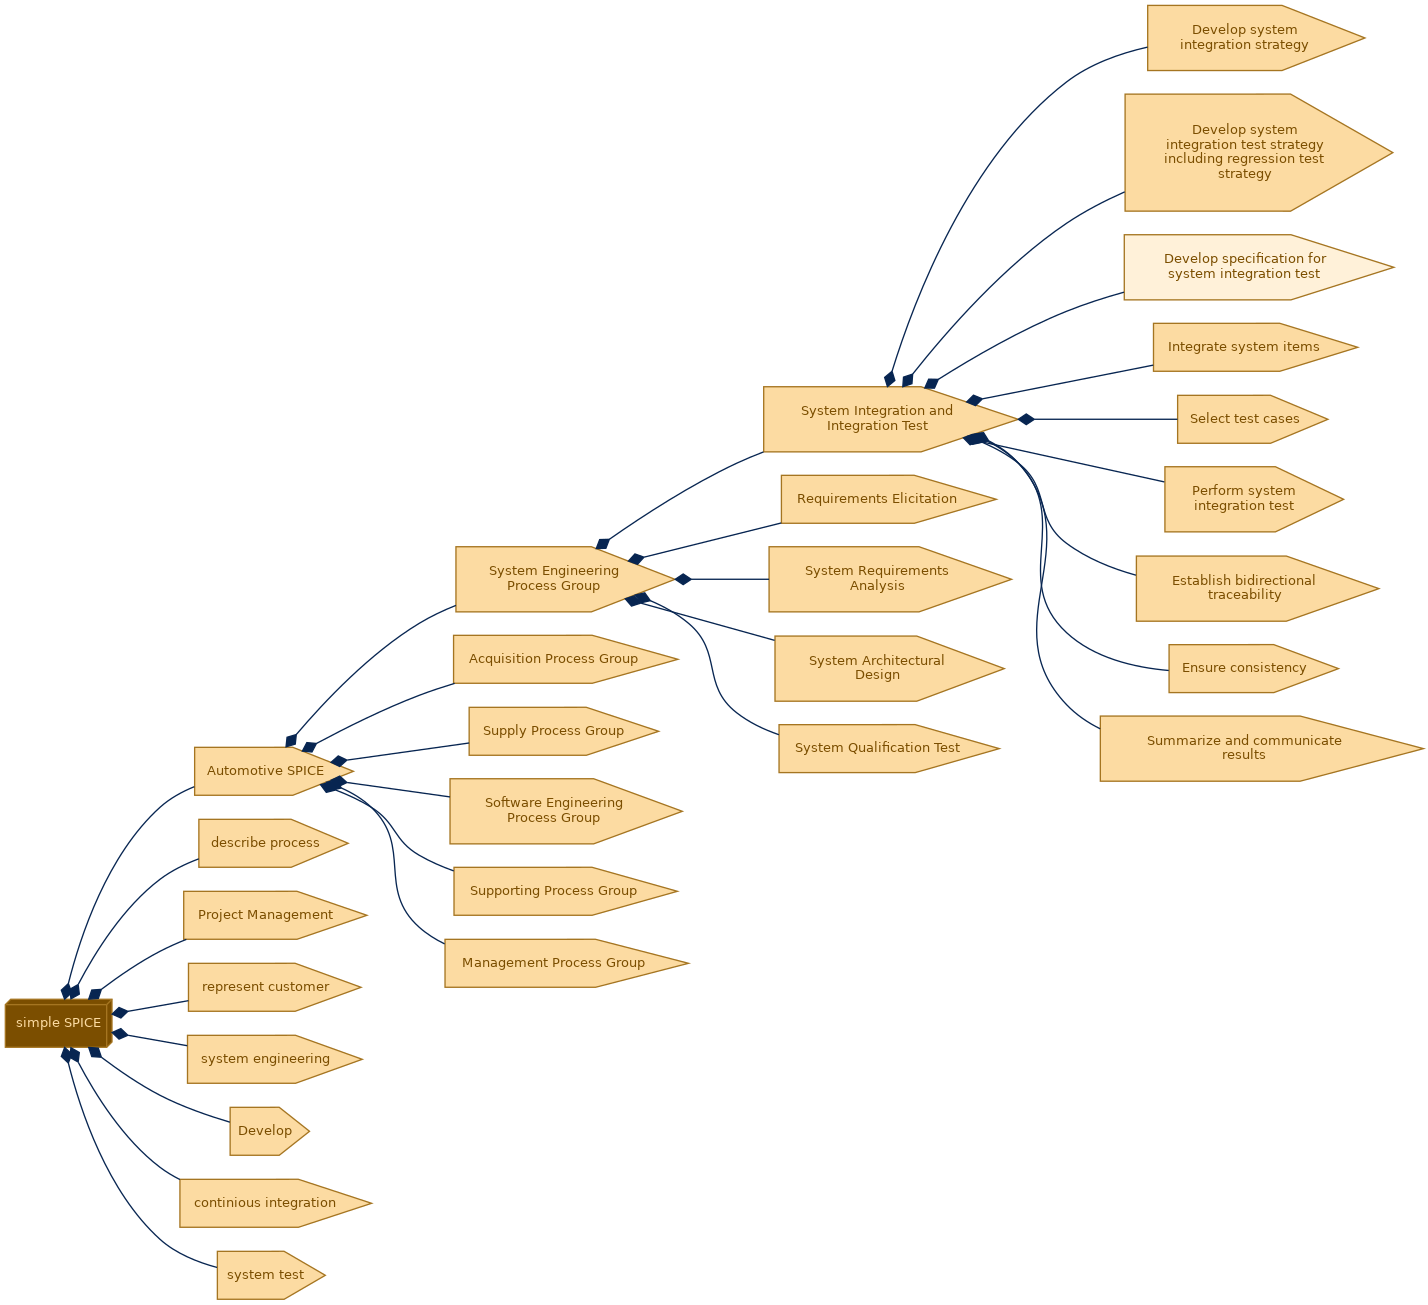 spem diagram of the activity breakdown: Develop specification for system integration test